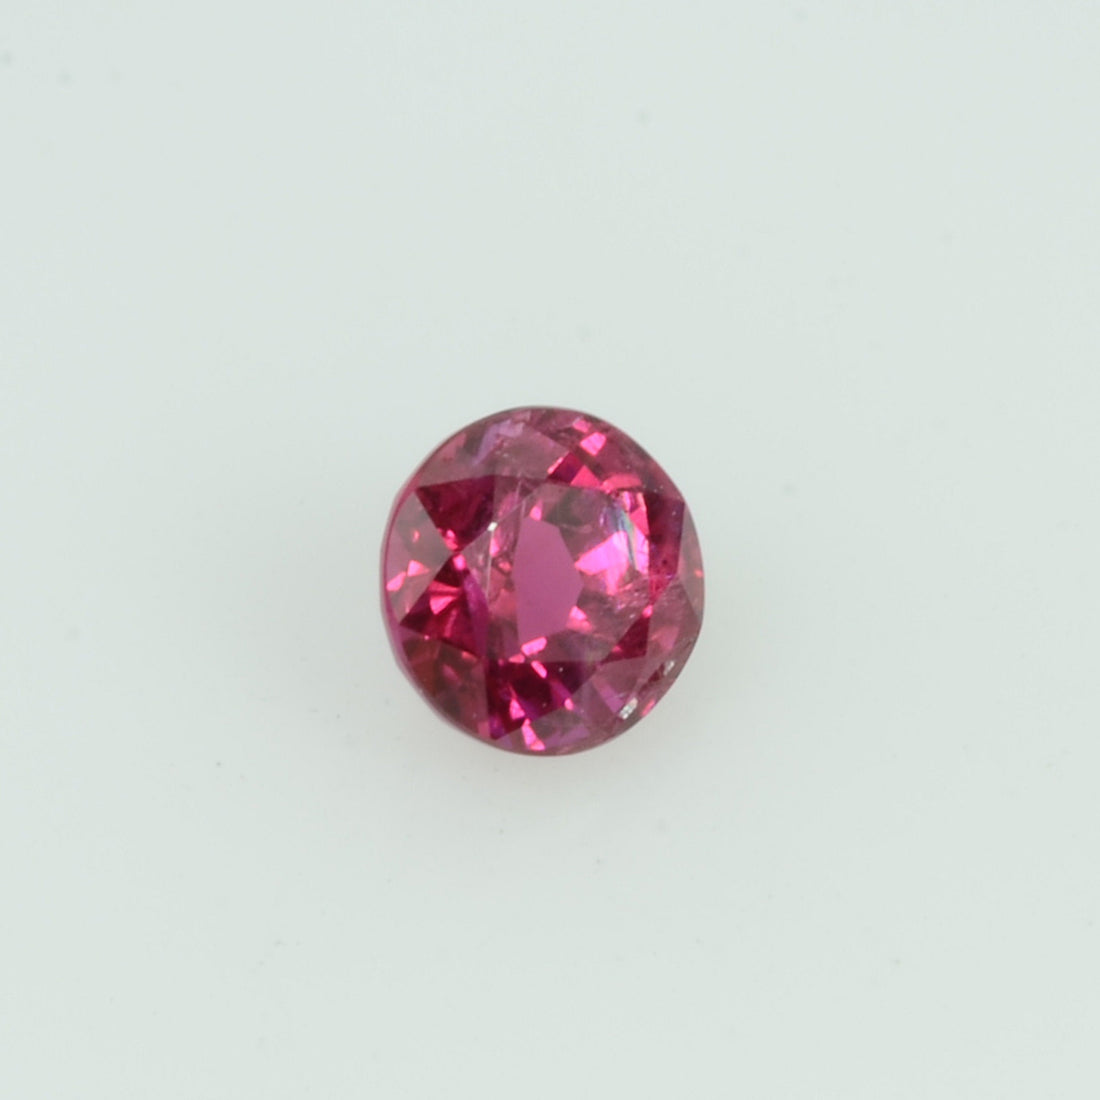 3.7 mm Natural Burma Ruby Loose Gemstone Round Cut